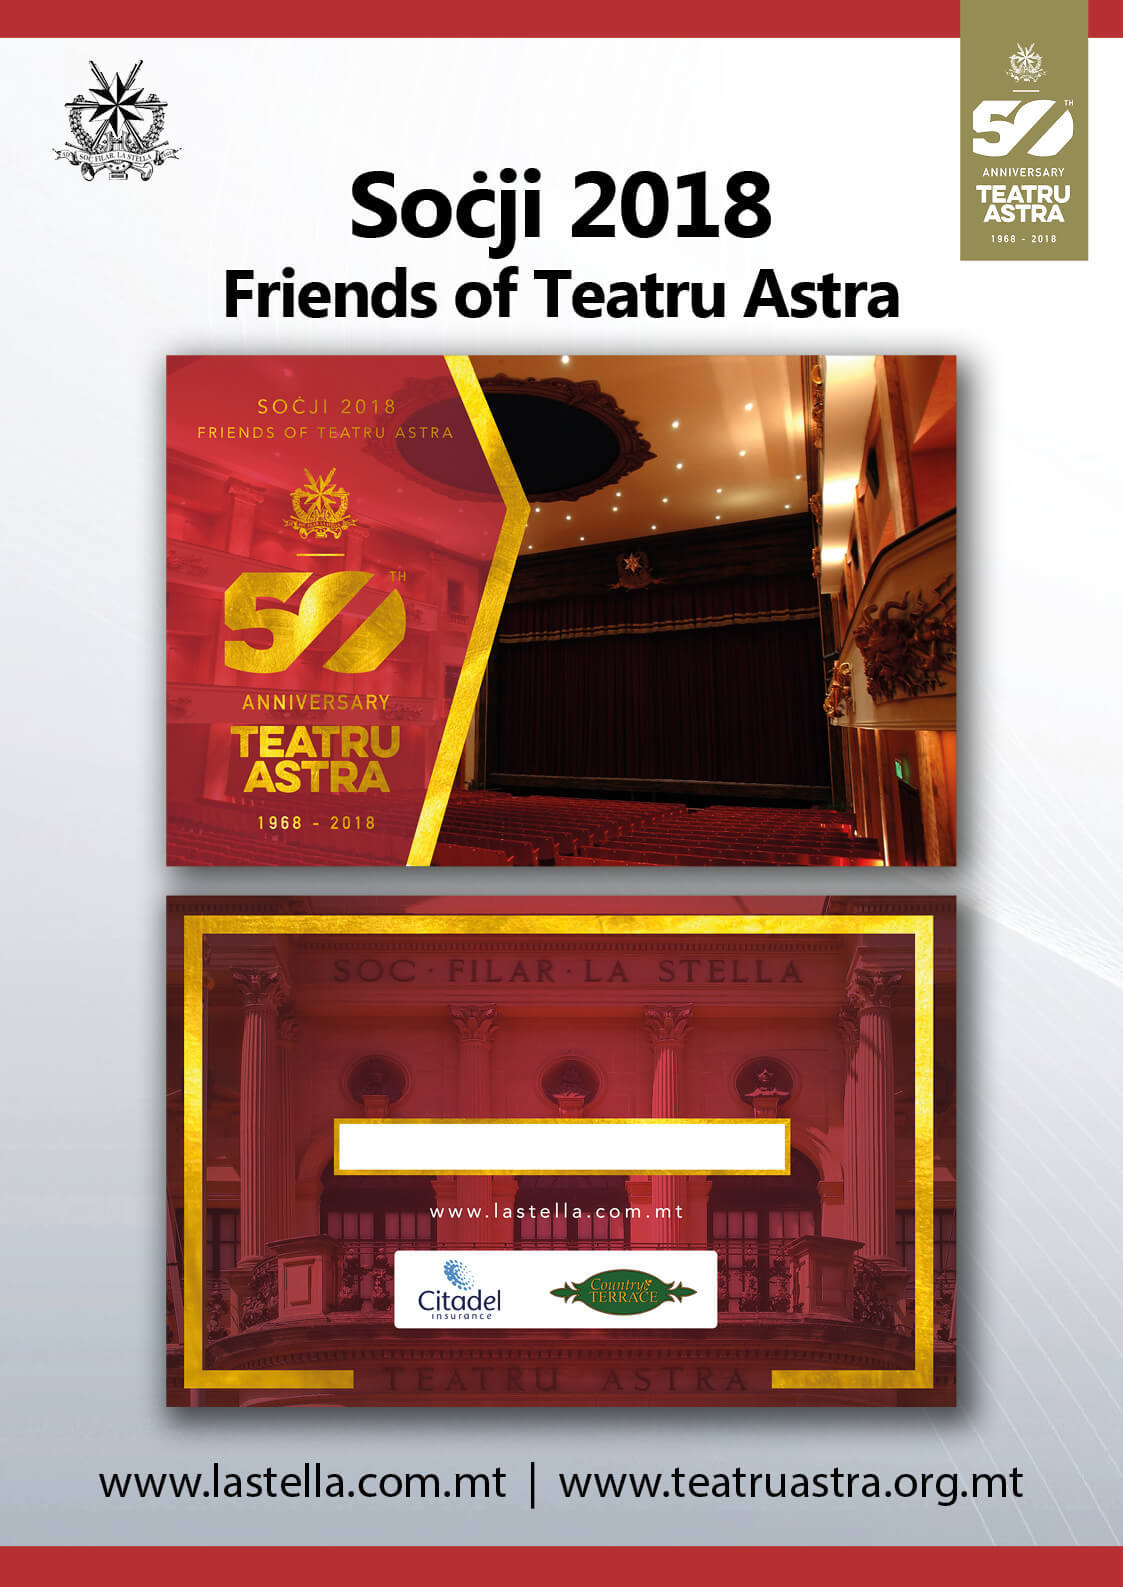 TEATRU ASTRA Celebrates 50TH Anniversary 